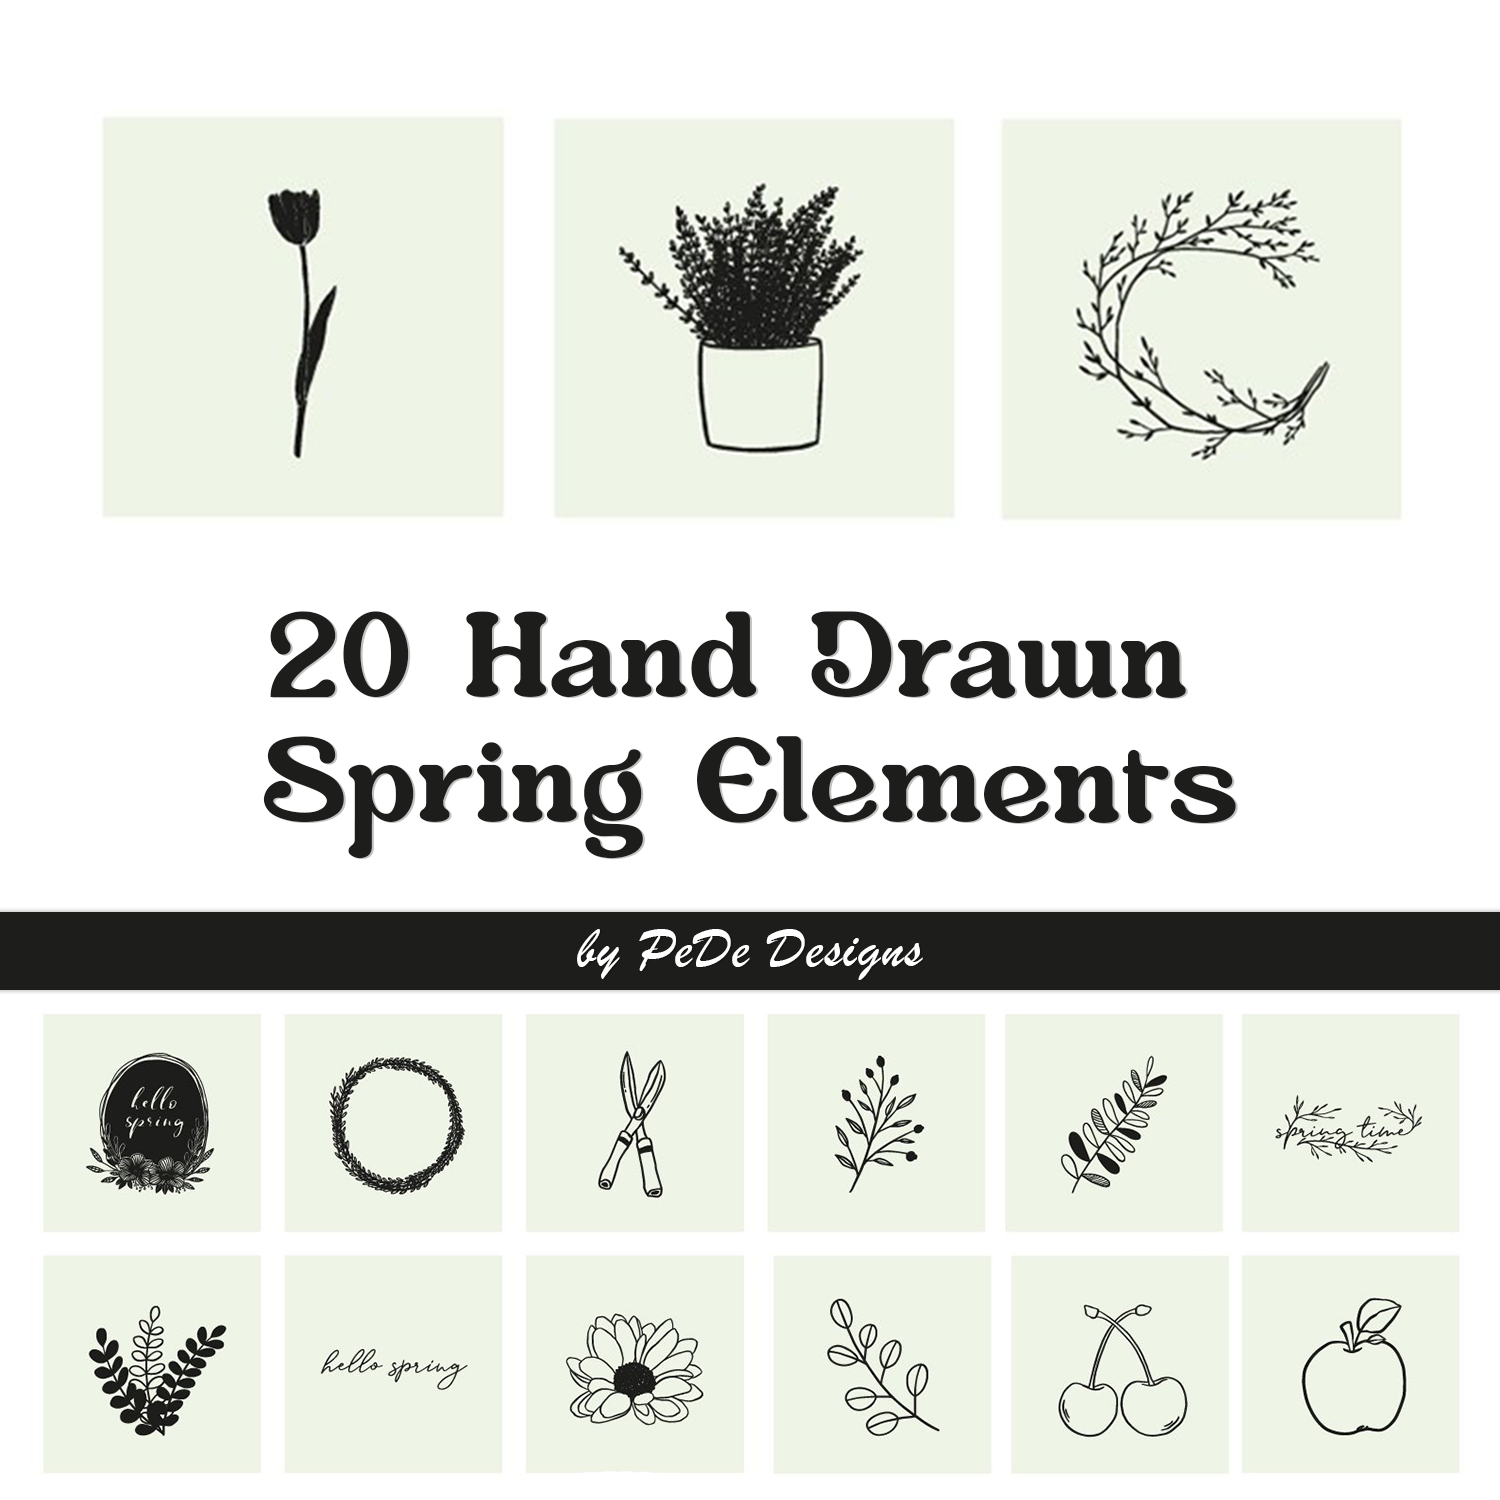 20 Hand Drawn Spring Elements.